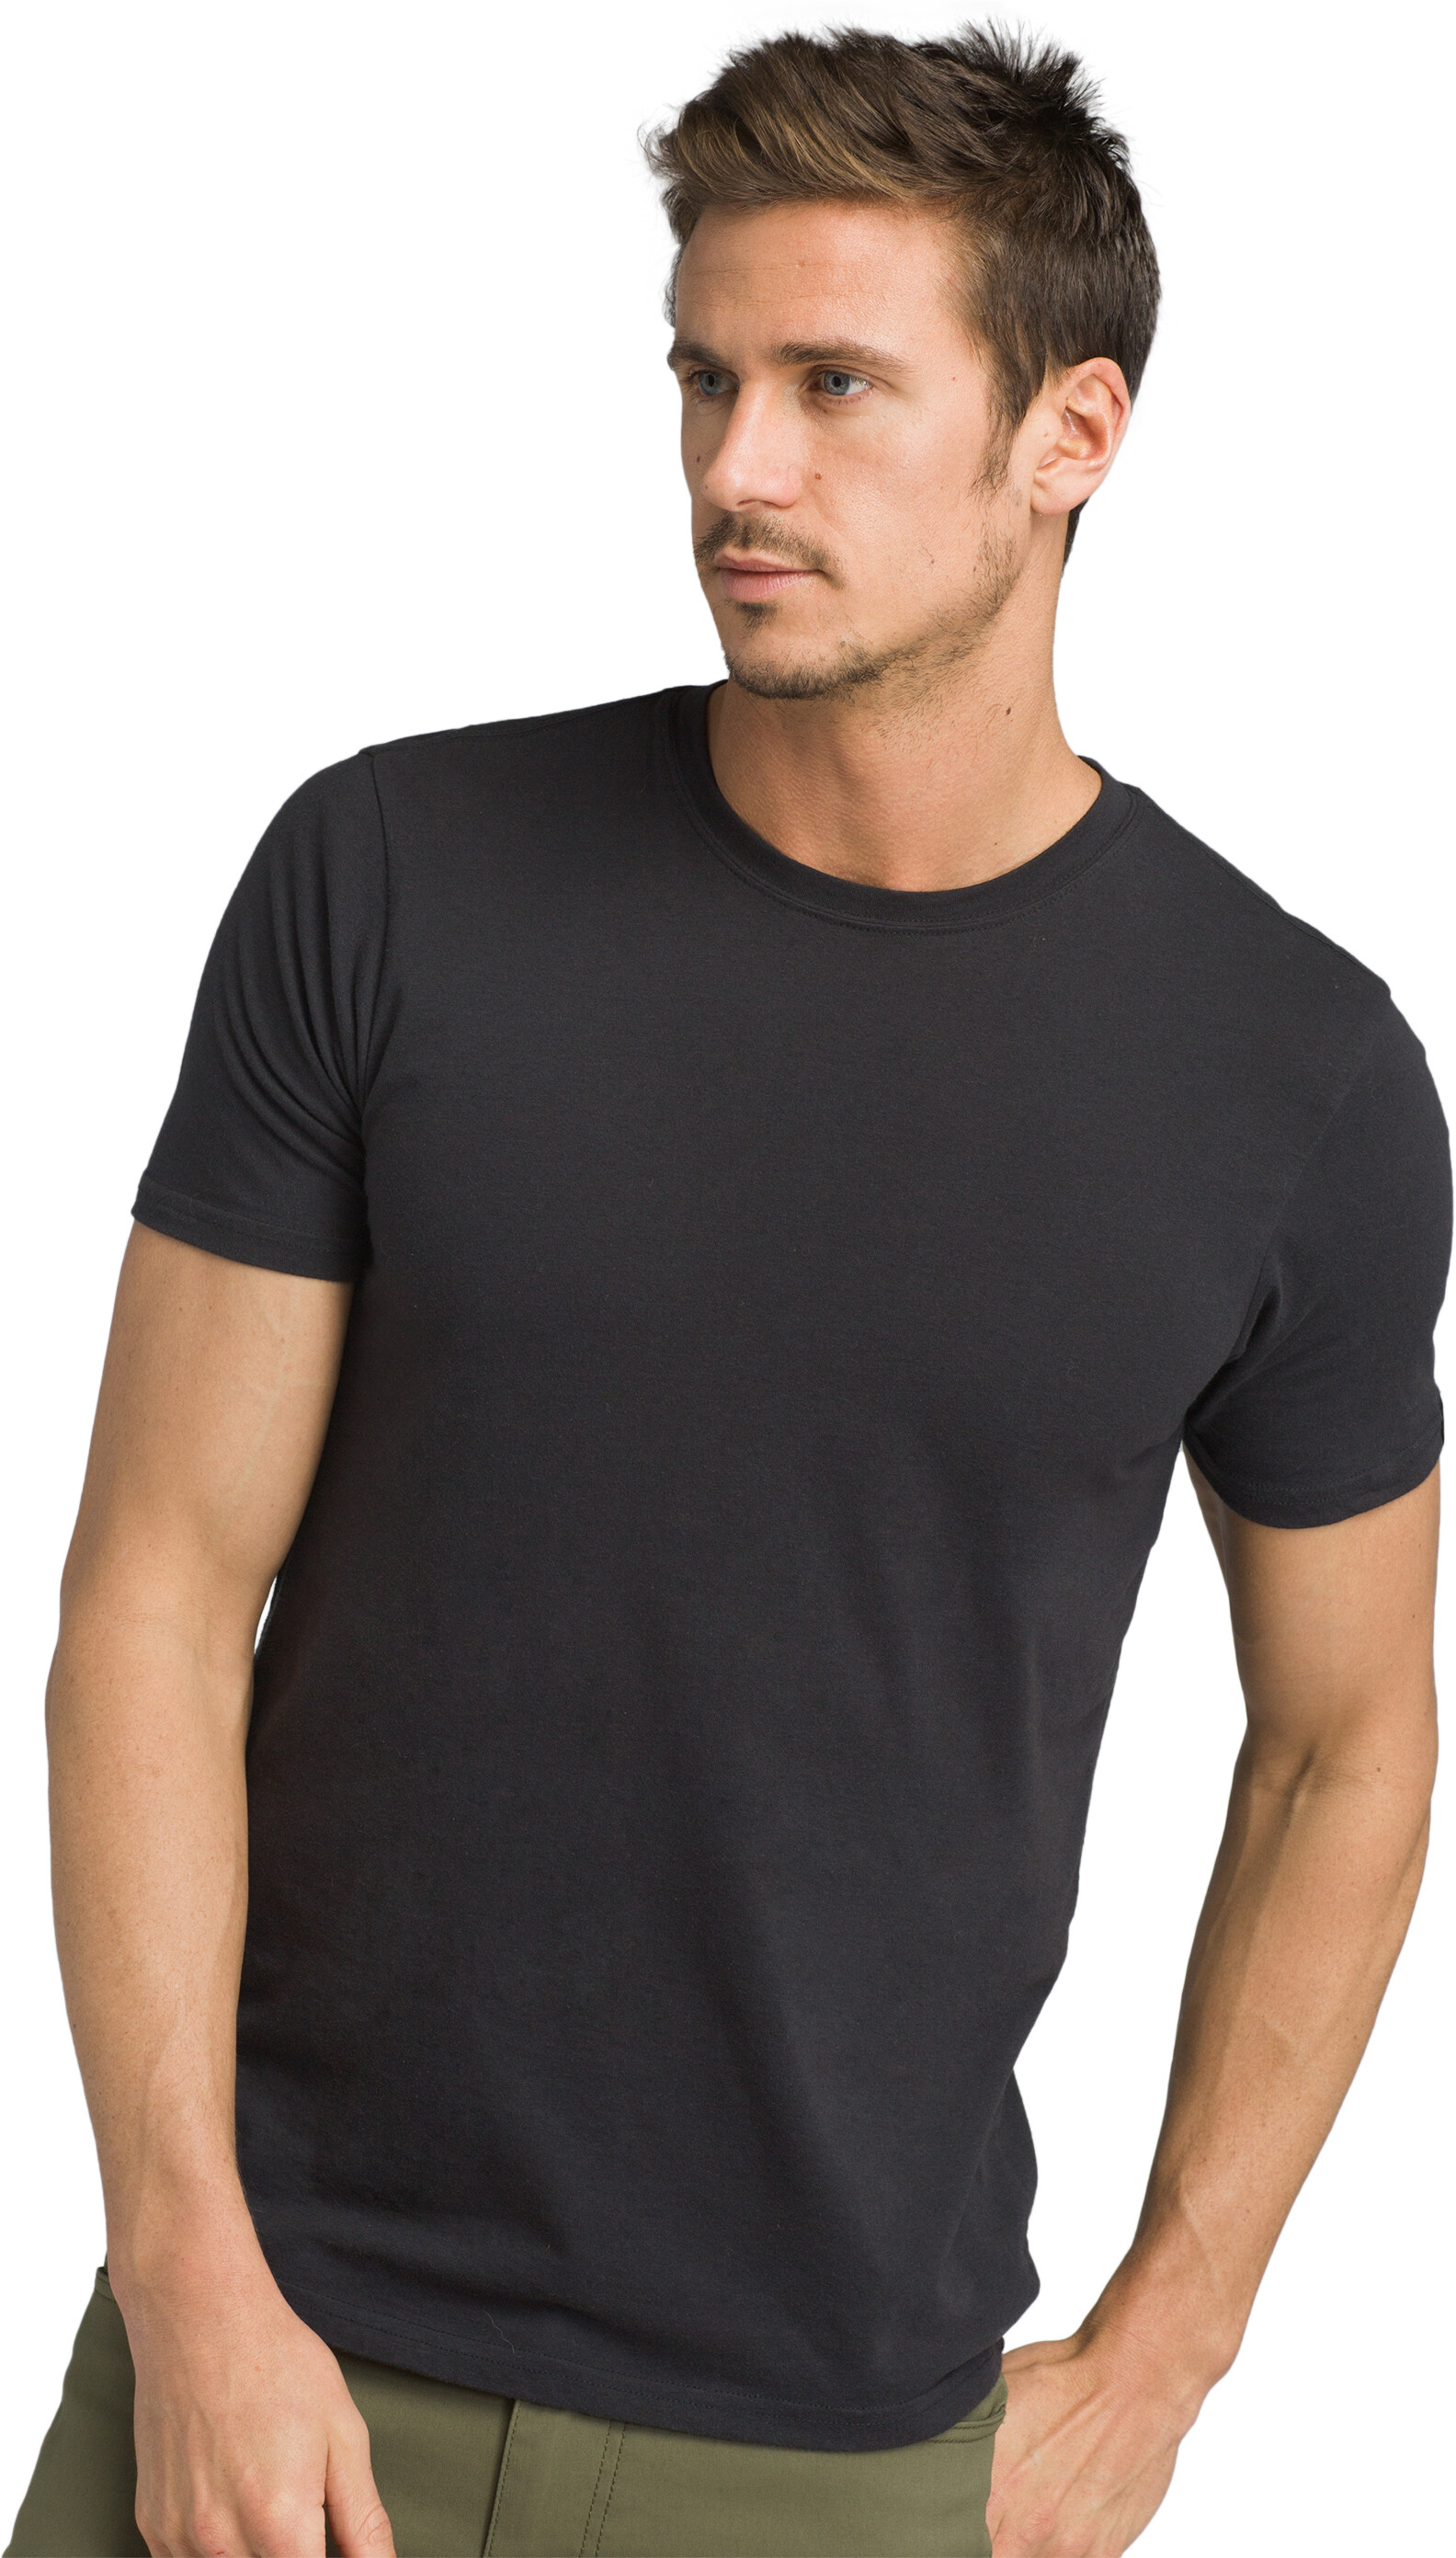 Prana Crew T-Shirt Men black | Addnature.co.uk